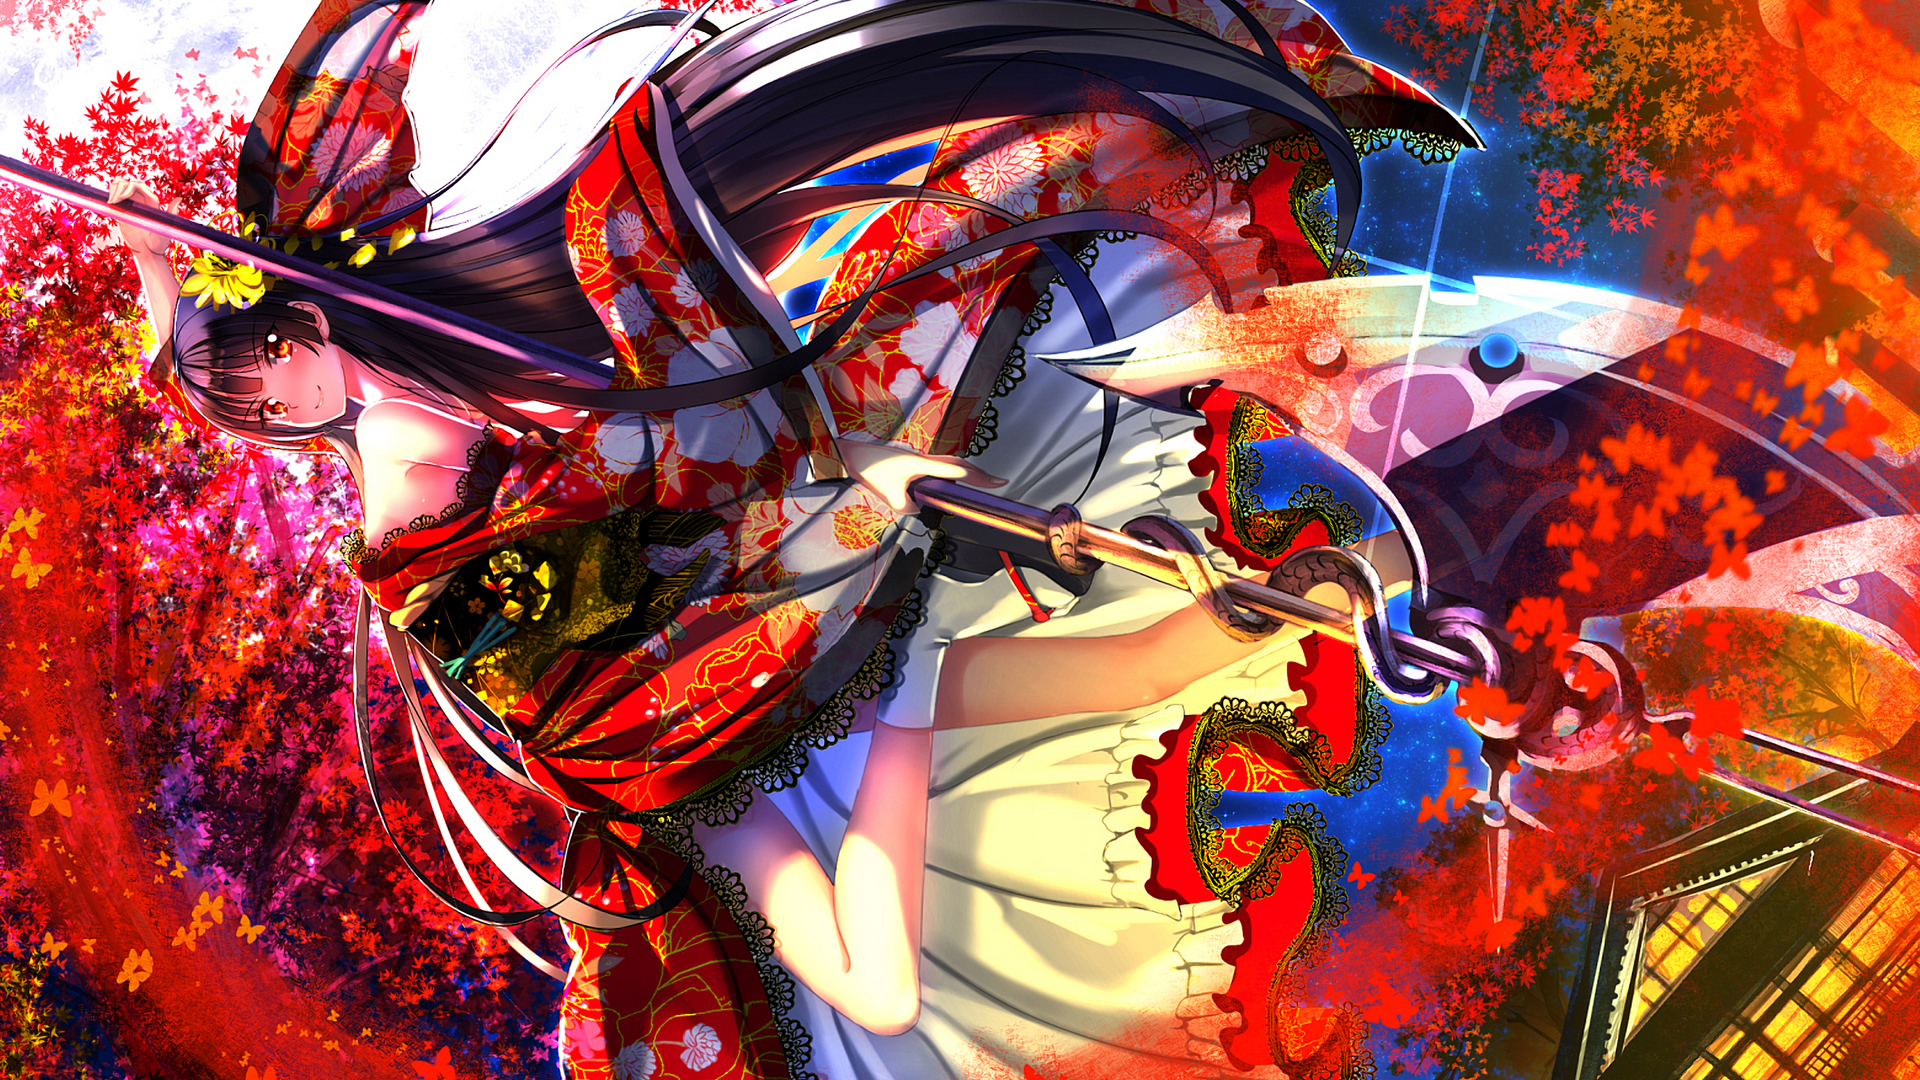 gate anime wallpaper,graphic design,cg artwork,illustration,art,graphics